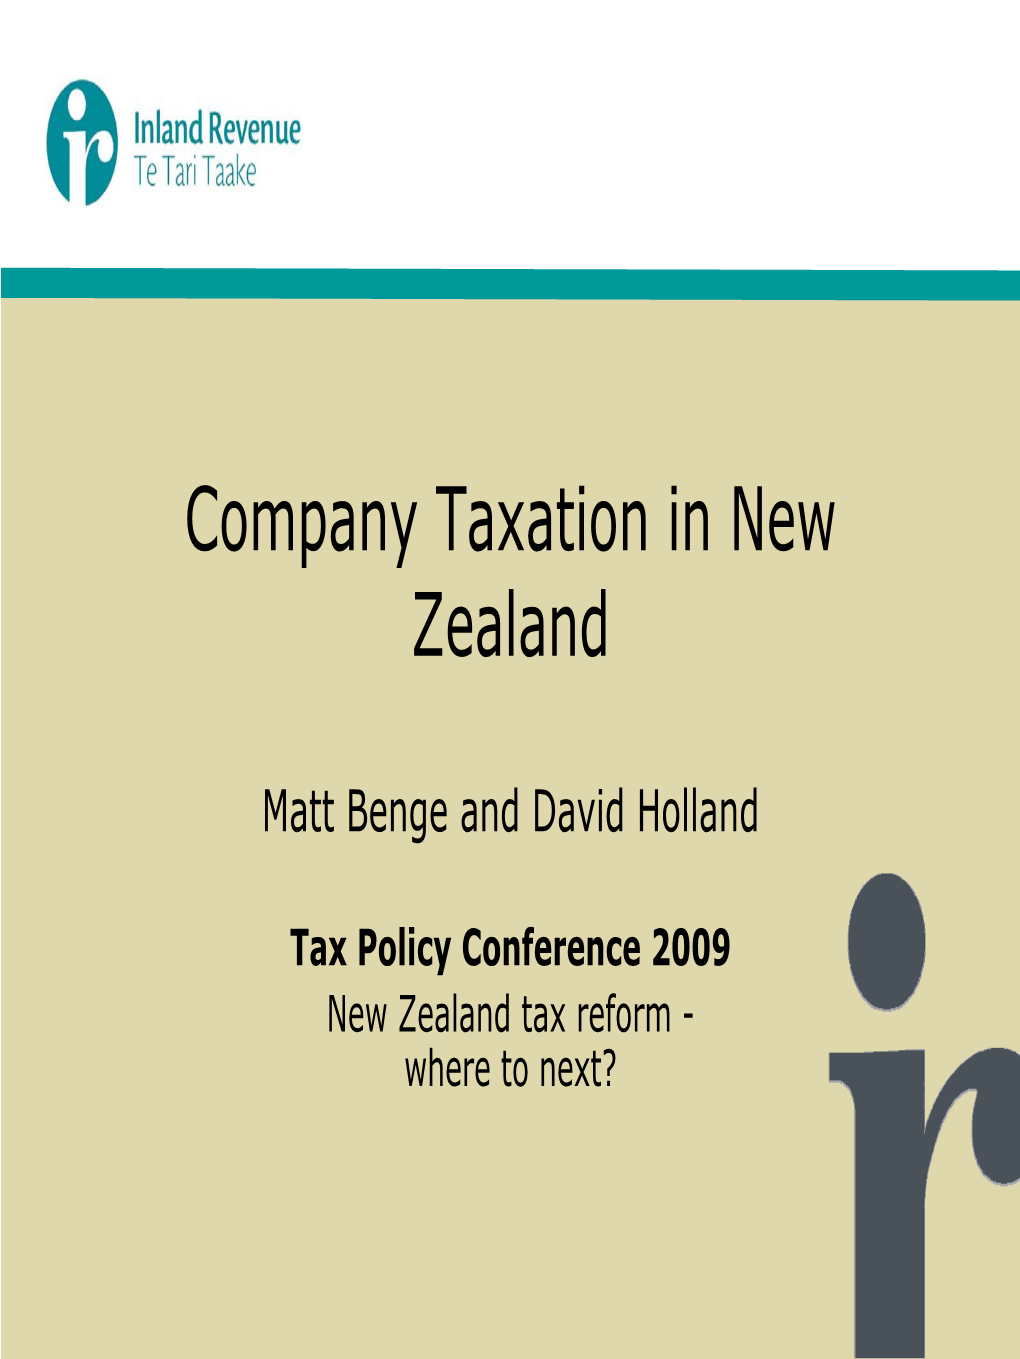 Presentation Slides—Company Taxation in New Zealand